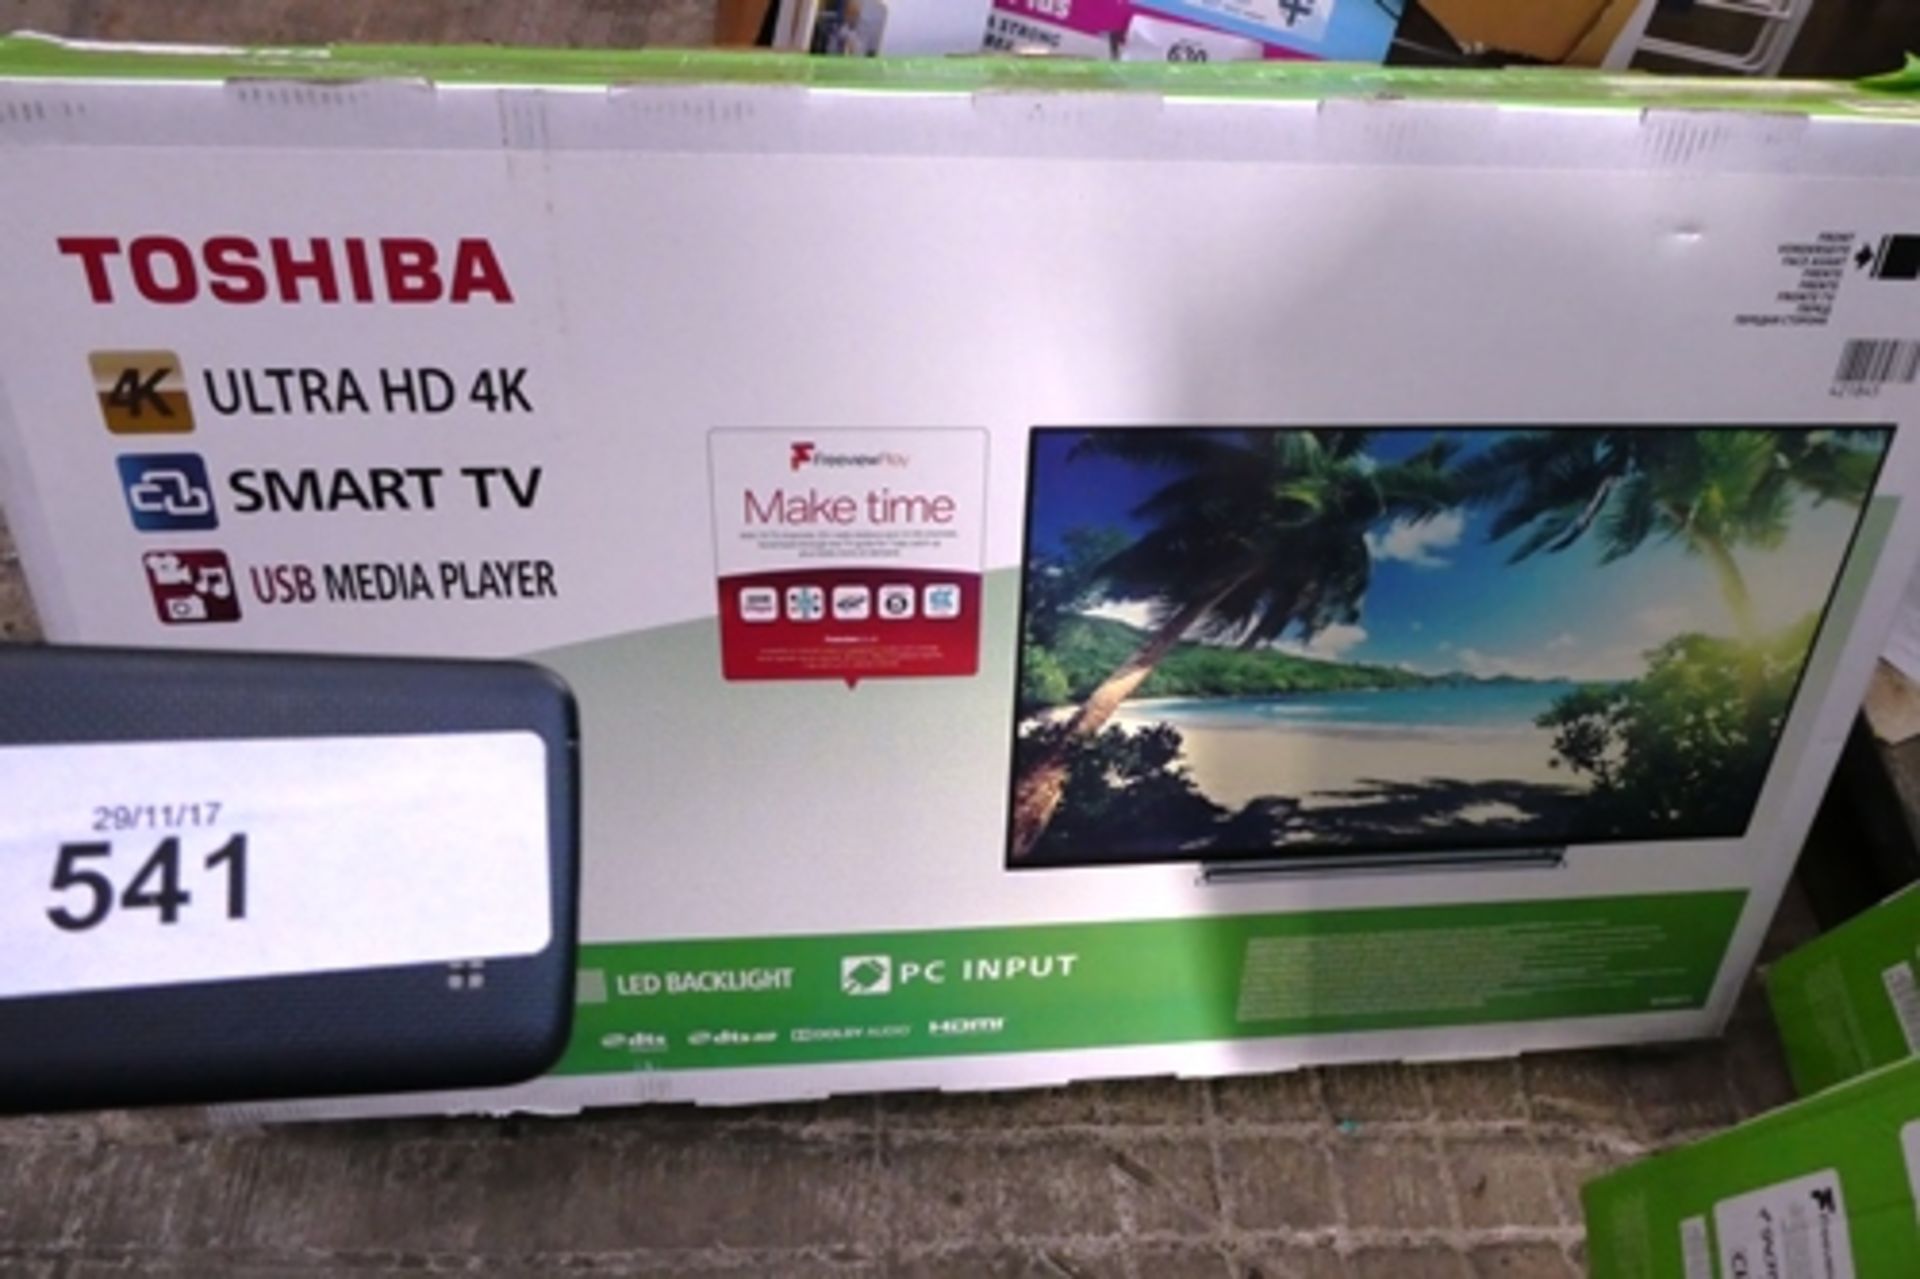 1 x Toshiba 43" 4K Smart TV, model number 43U6763DB - Sealed new in box (Corner Cage)